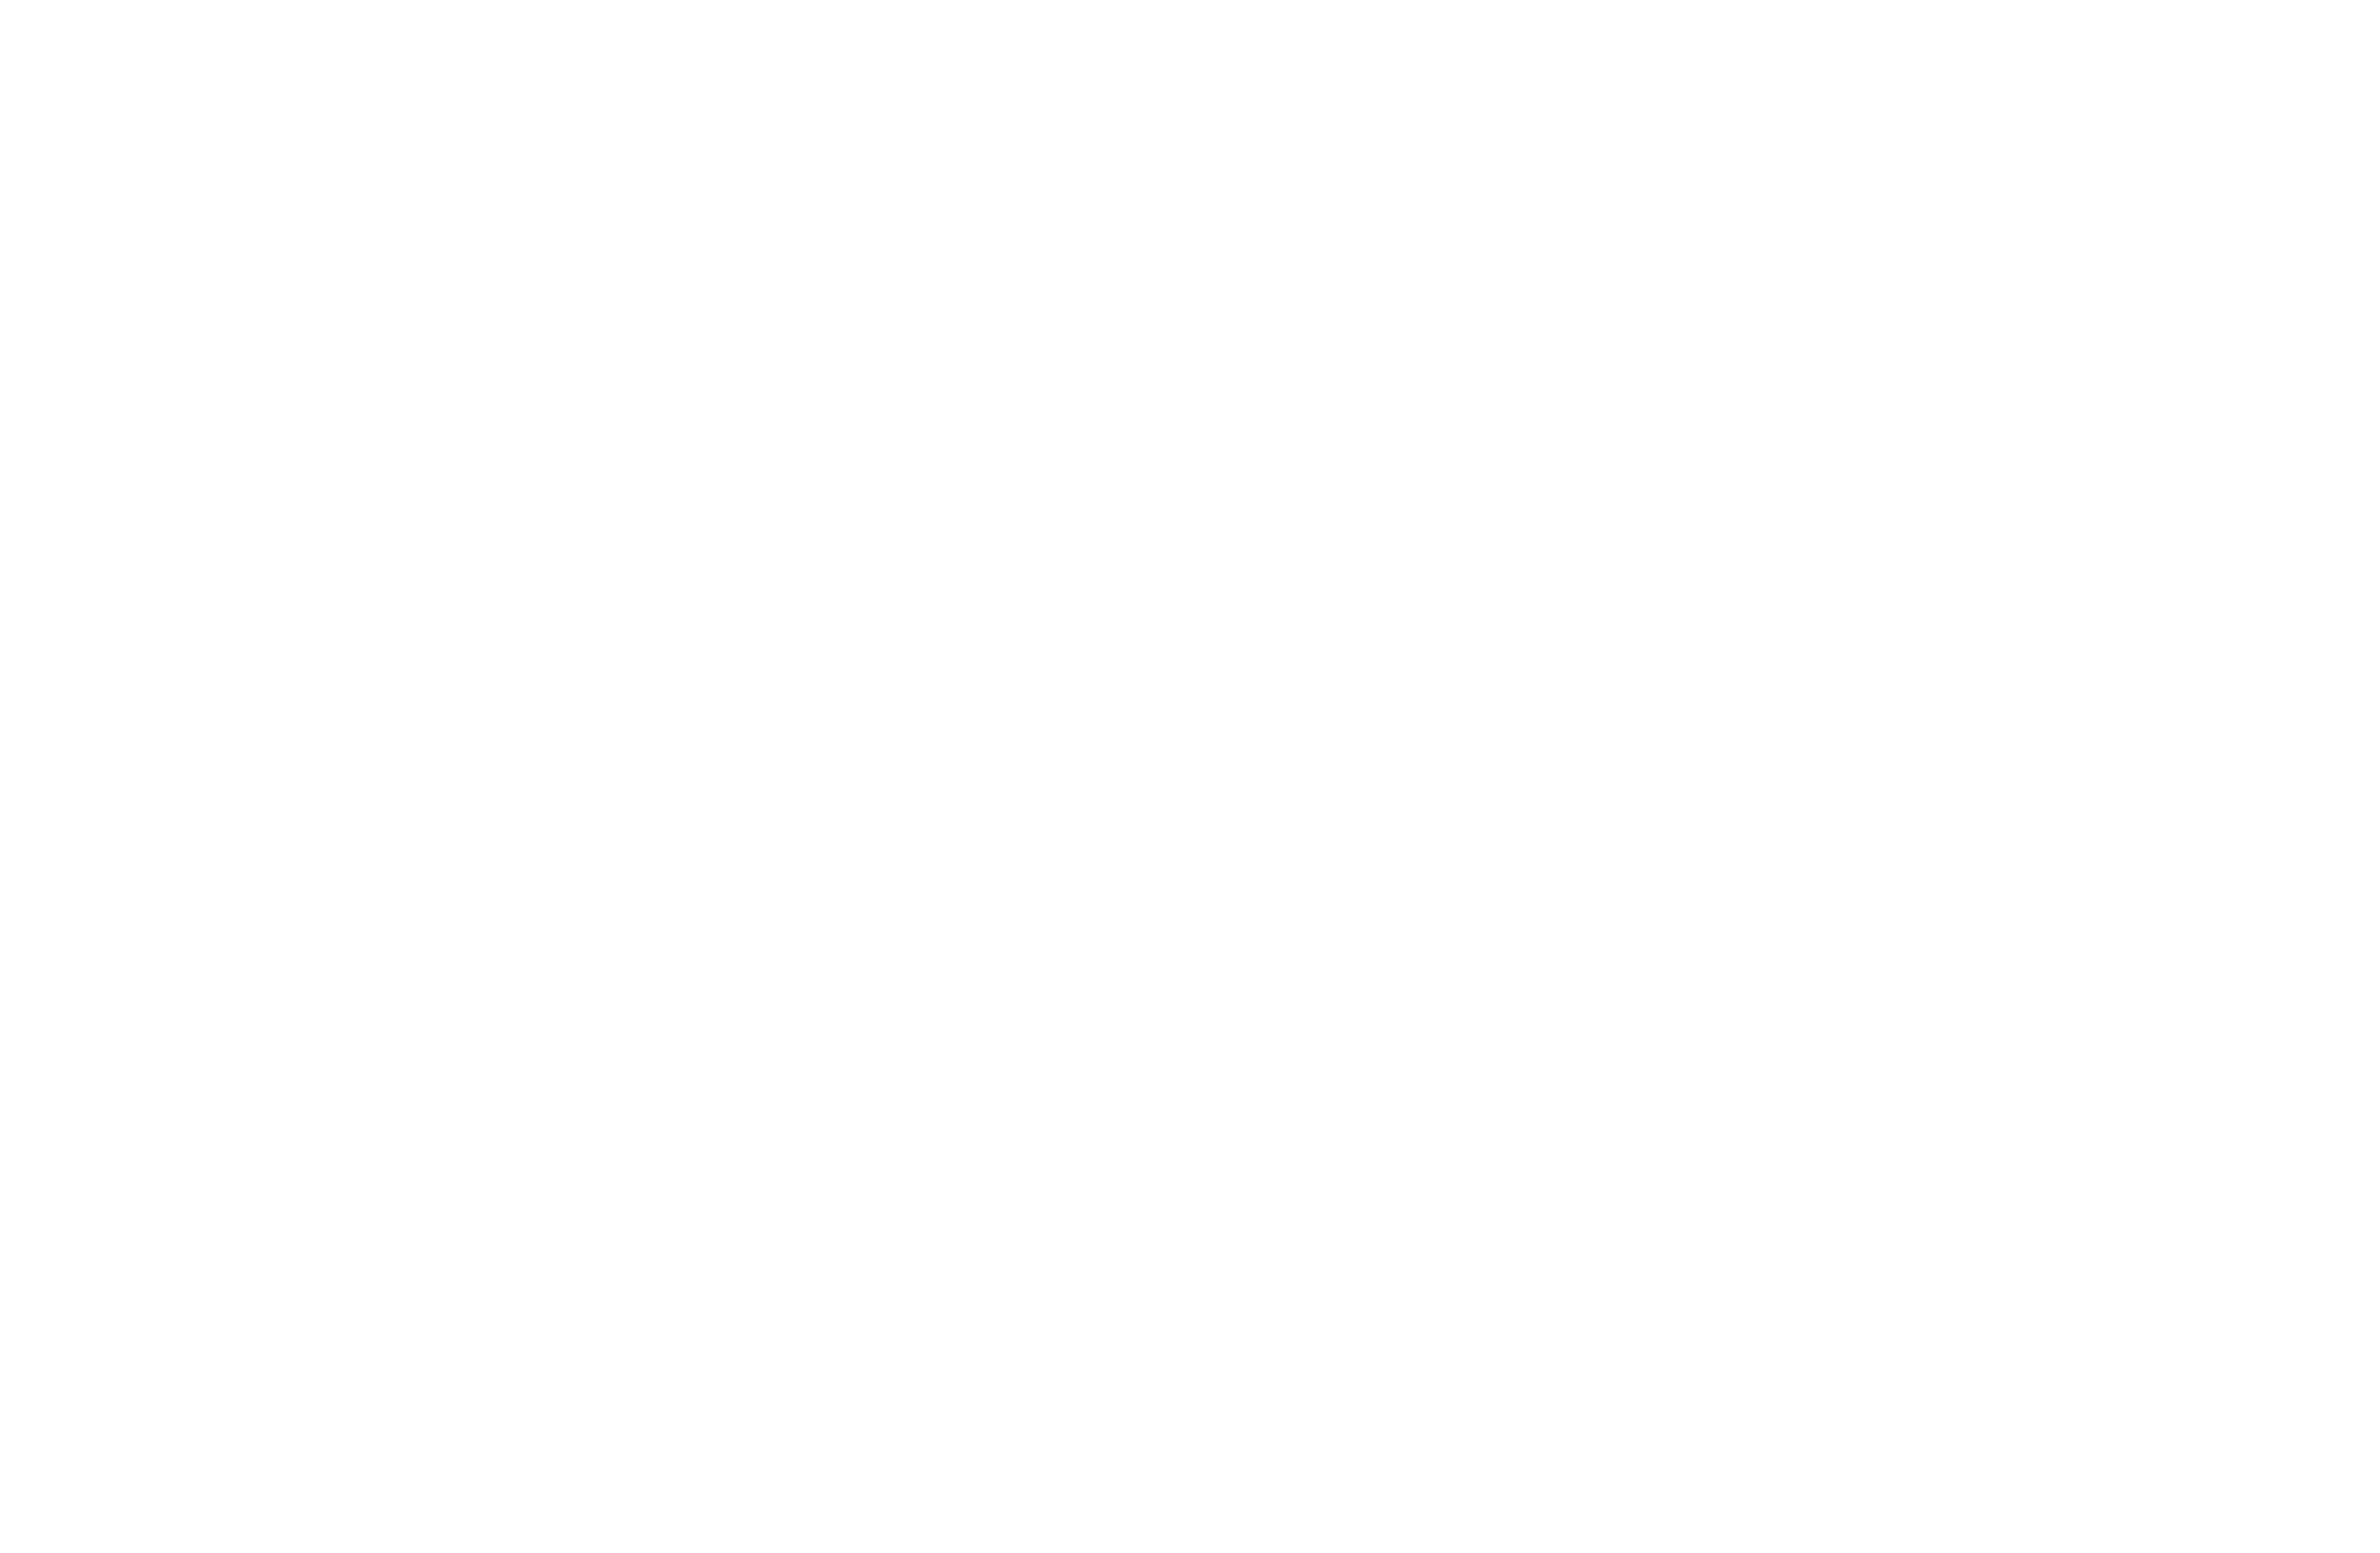 Onishi Kensuke Text